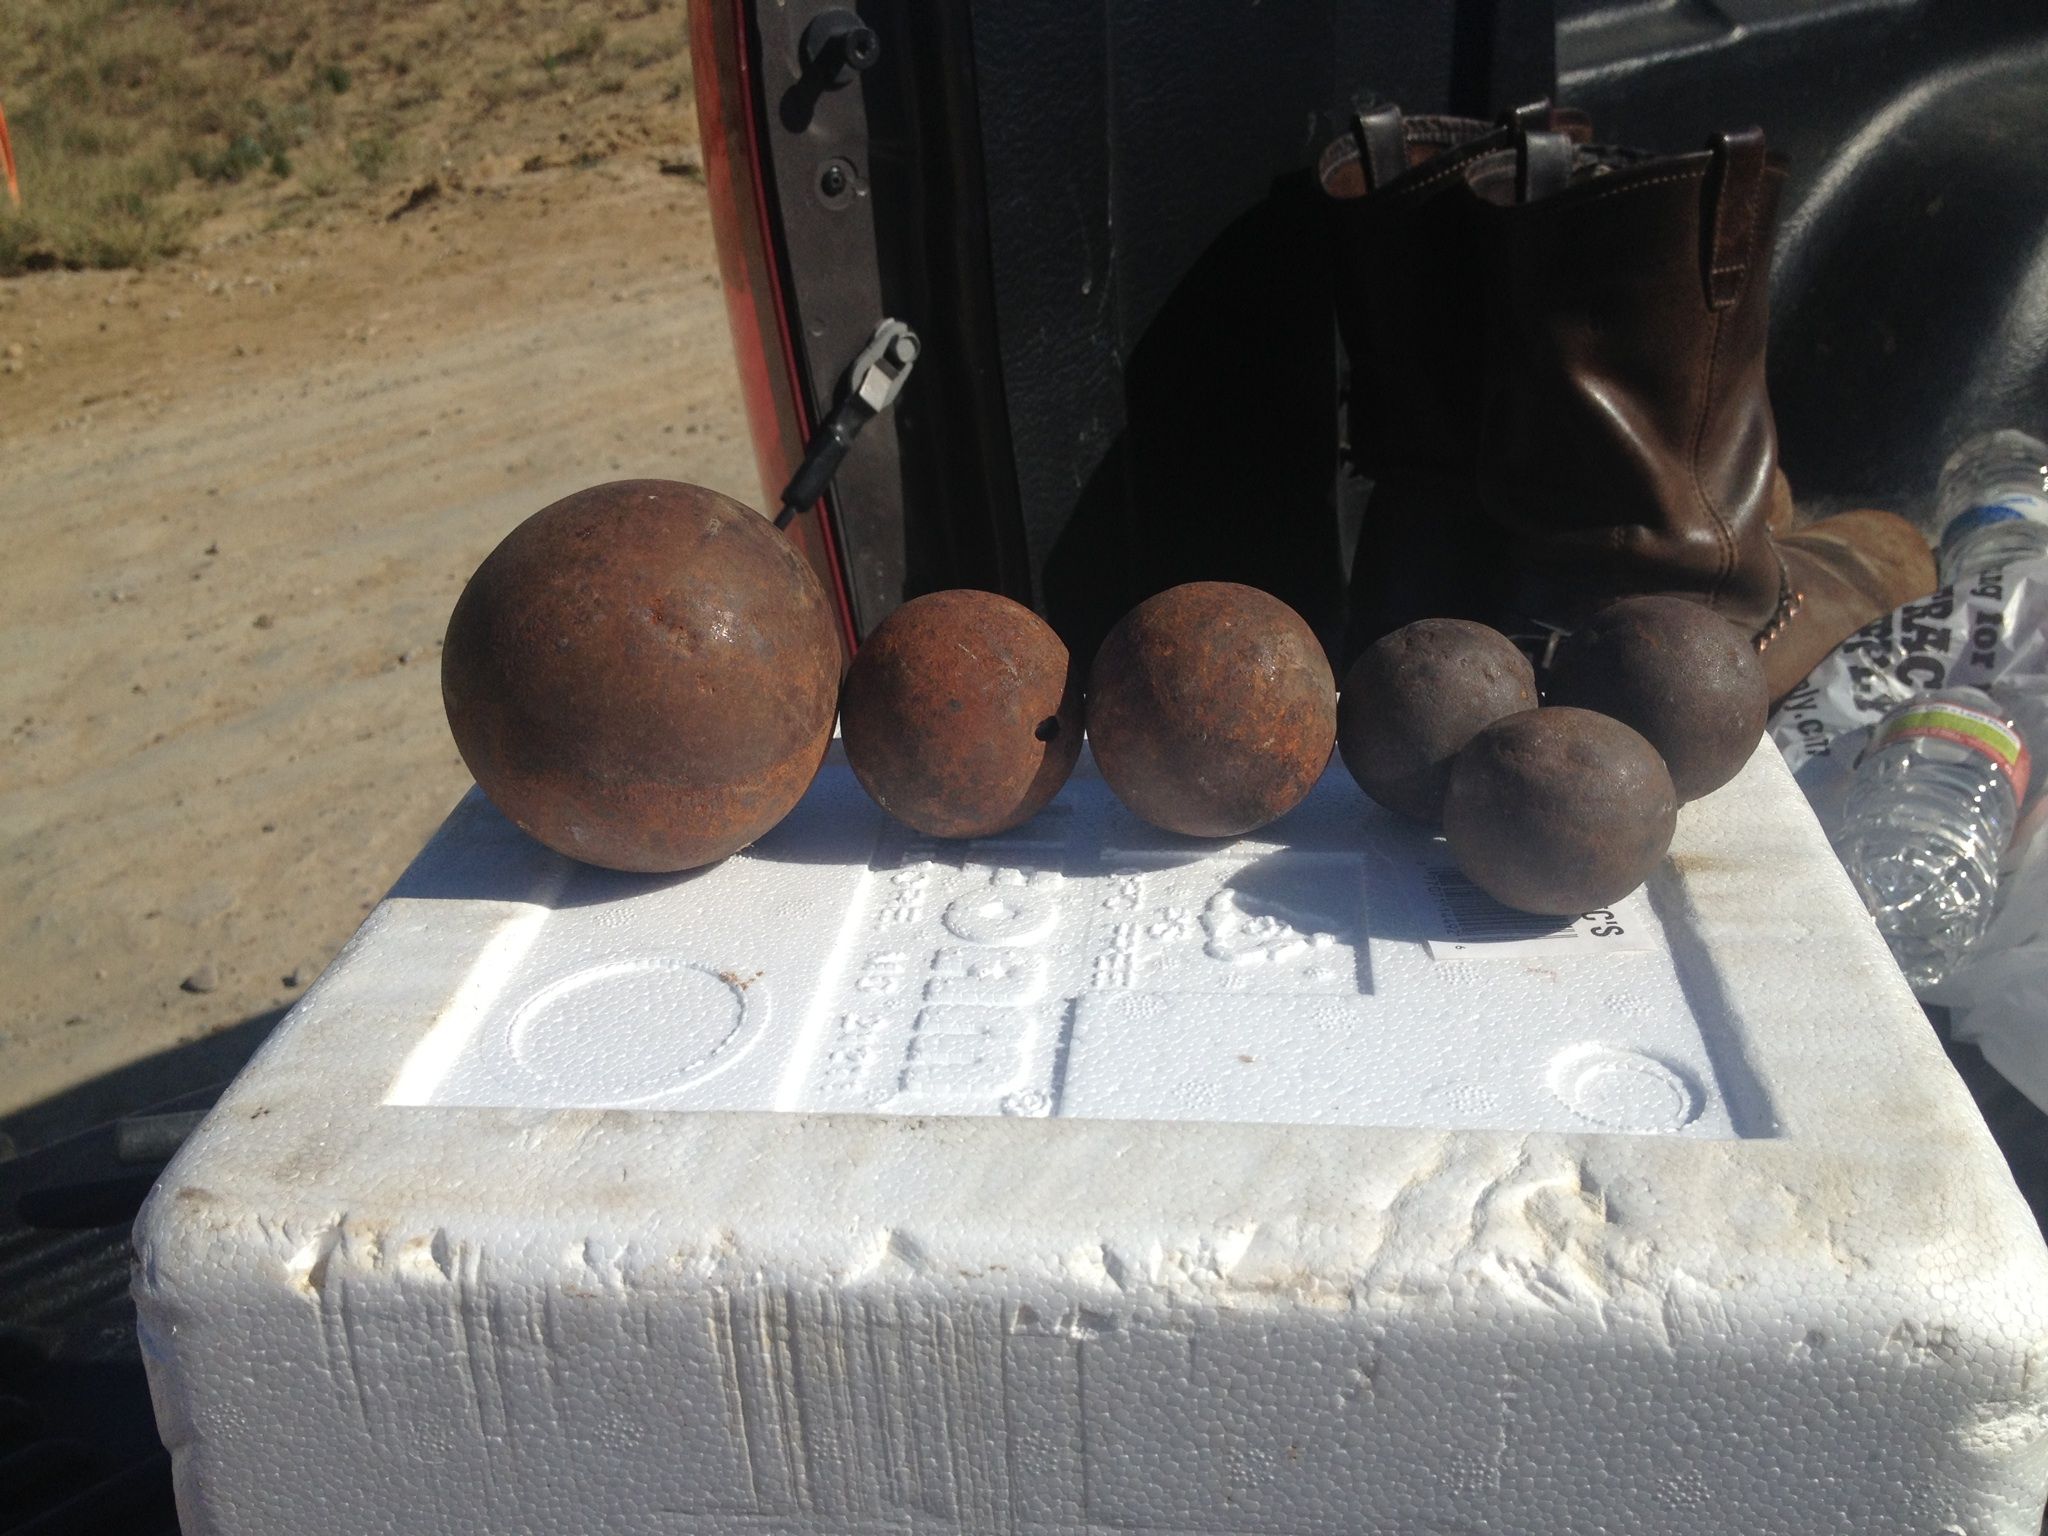 February 2, 2013 Cannon Balls found by Ismael